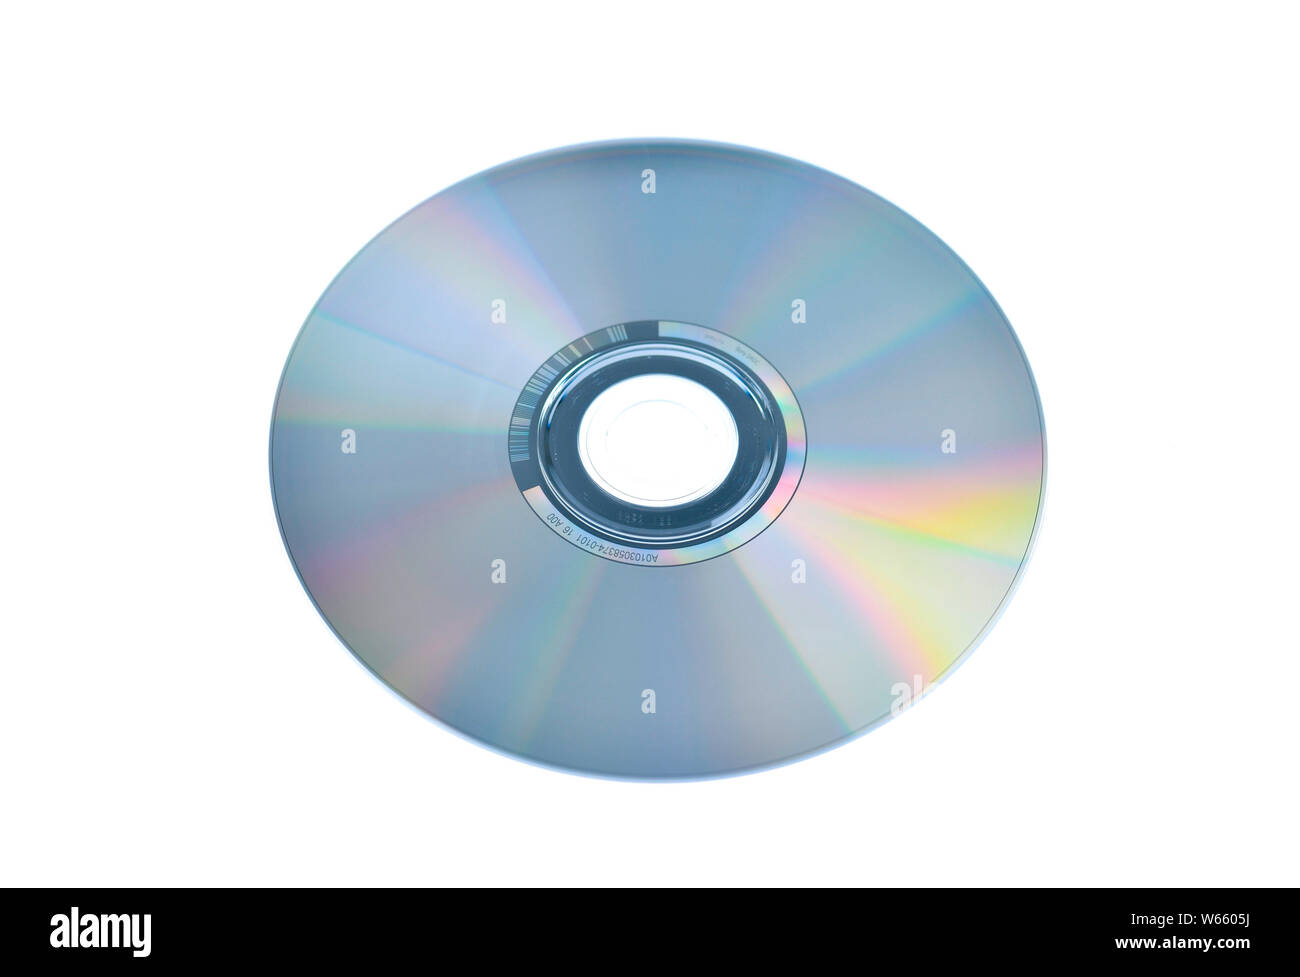 DVD, Digital Versatile Disc, Digital Video Disc Stockfoto